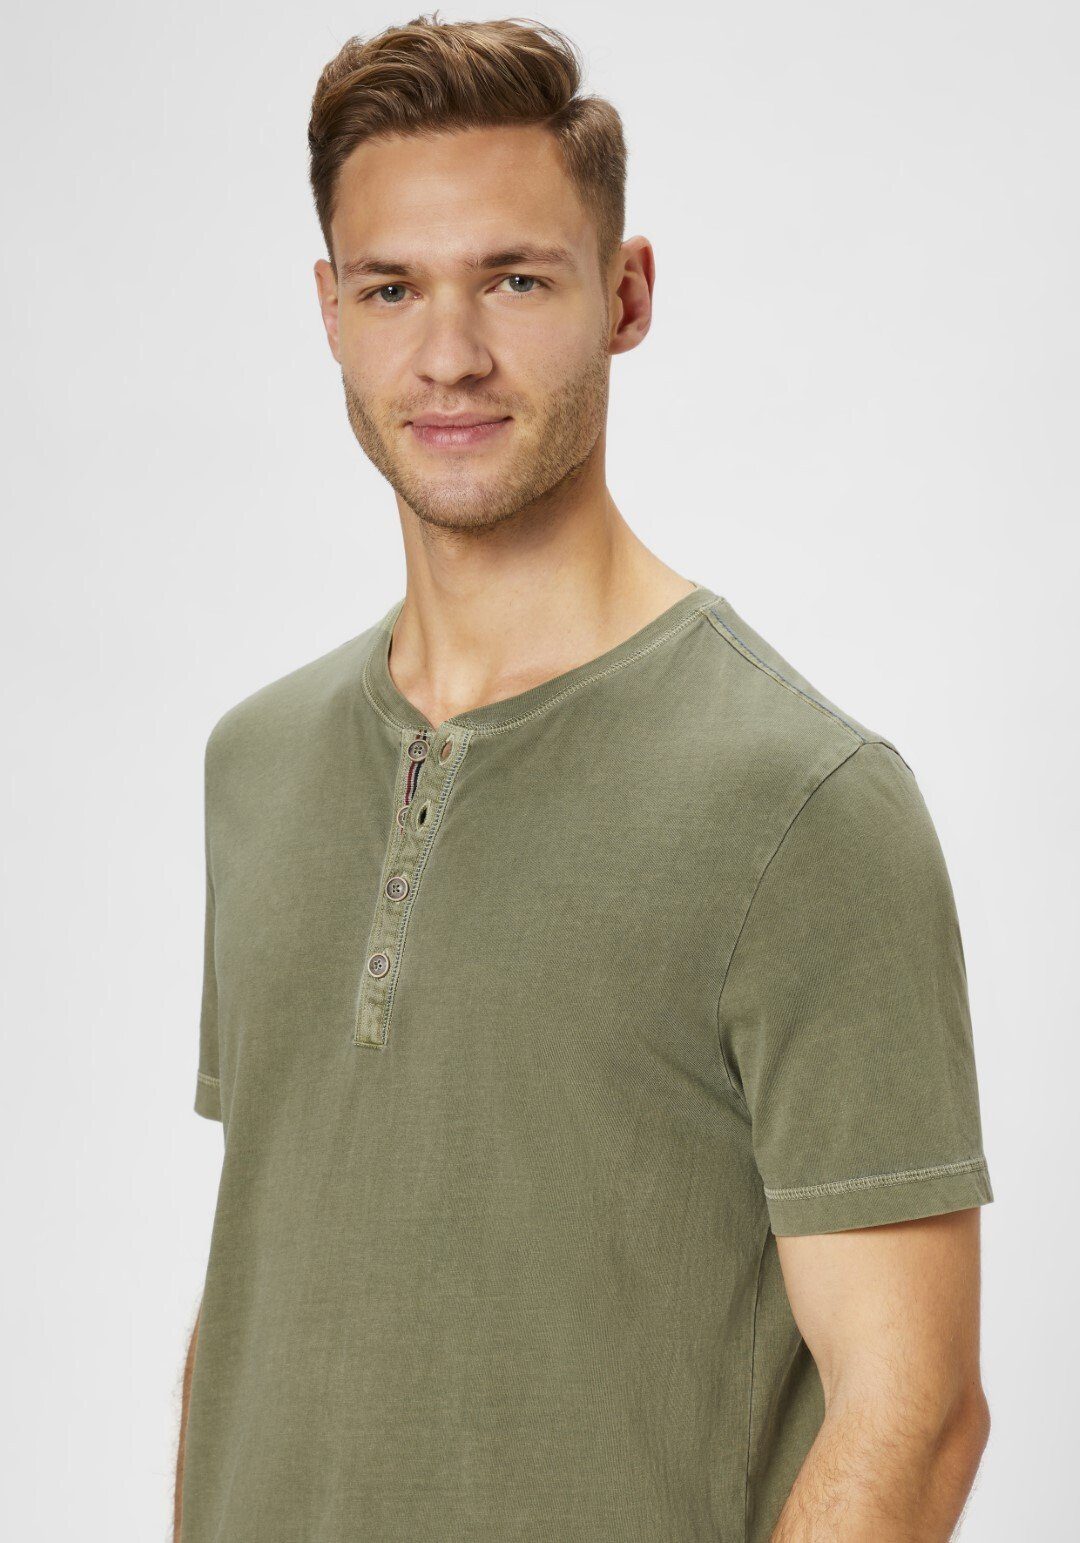 Paddock's Kurzarmshirt Henley Baumwolle dusty olive aus Shirt